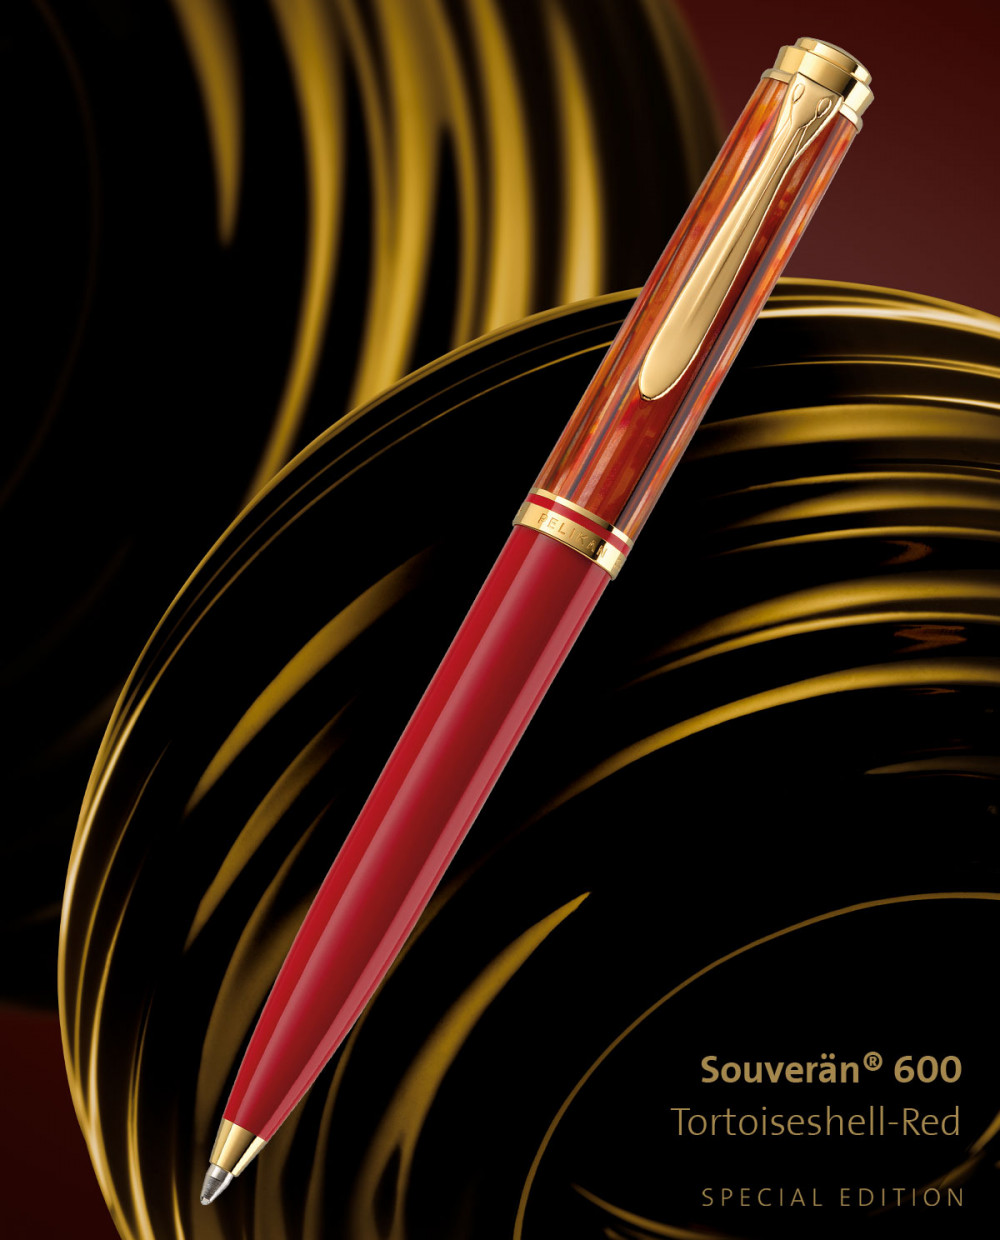 Шариковая ручка Pelikan Souveran K600 Tortoiseshell-Red Special Edition 2020, артикул PL815871. Фото 2